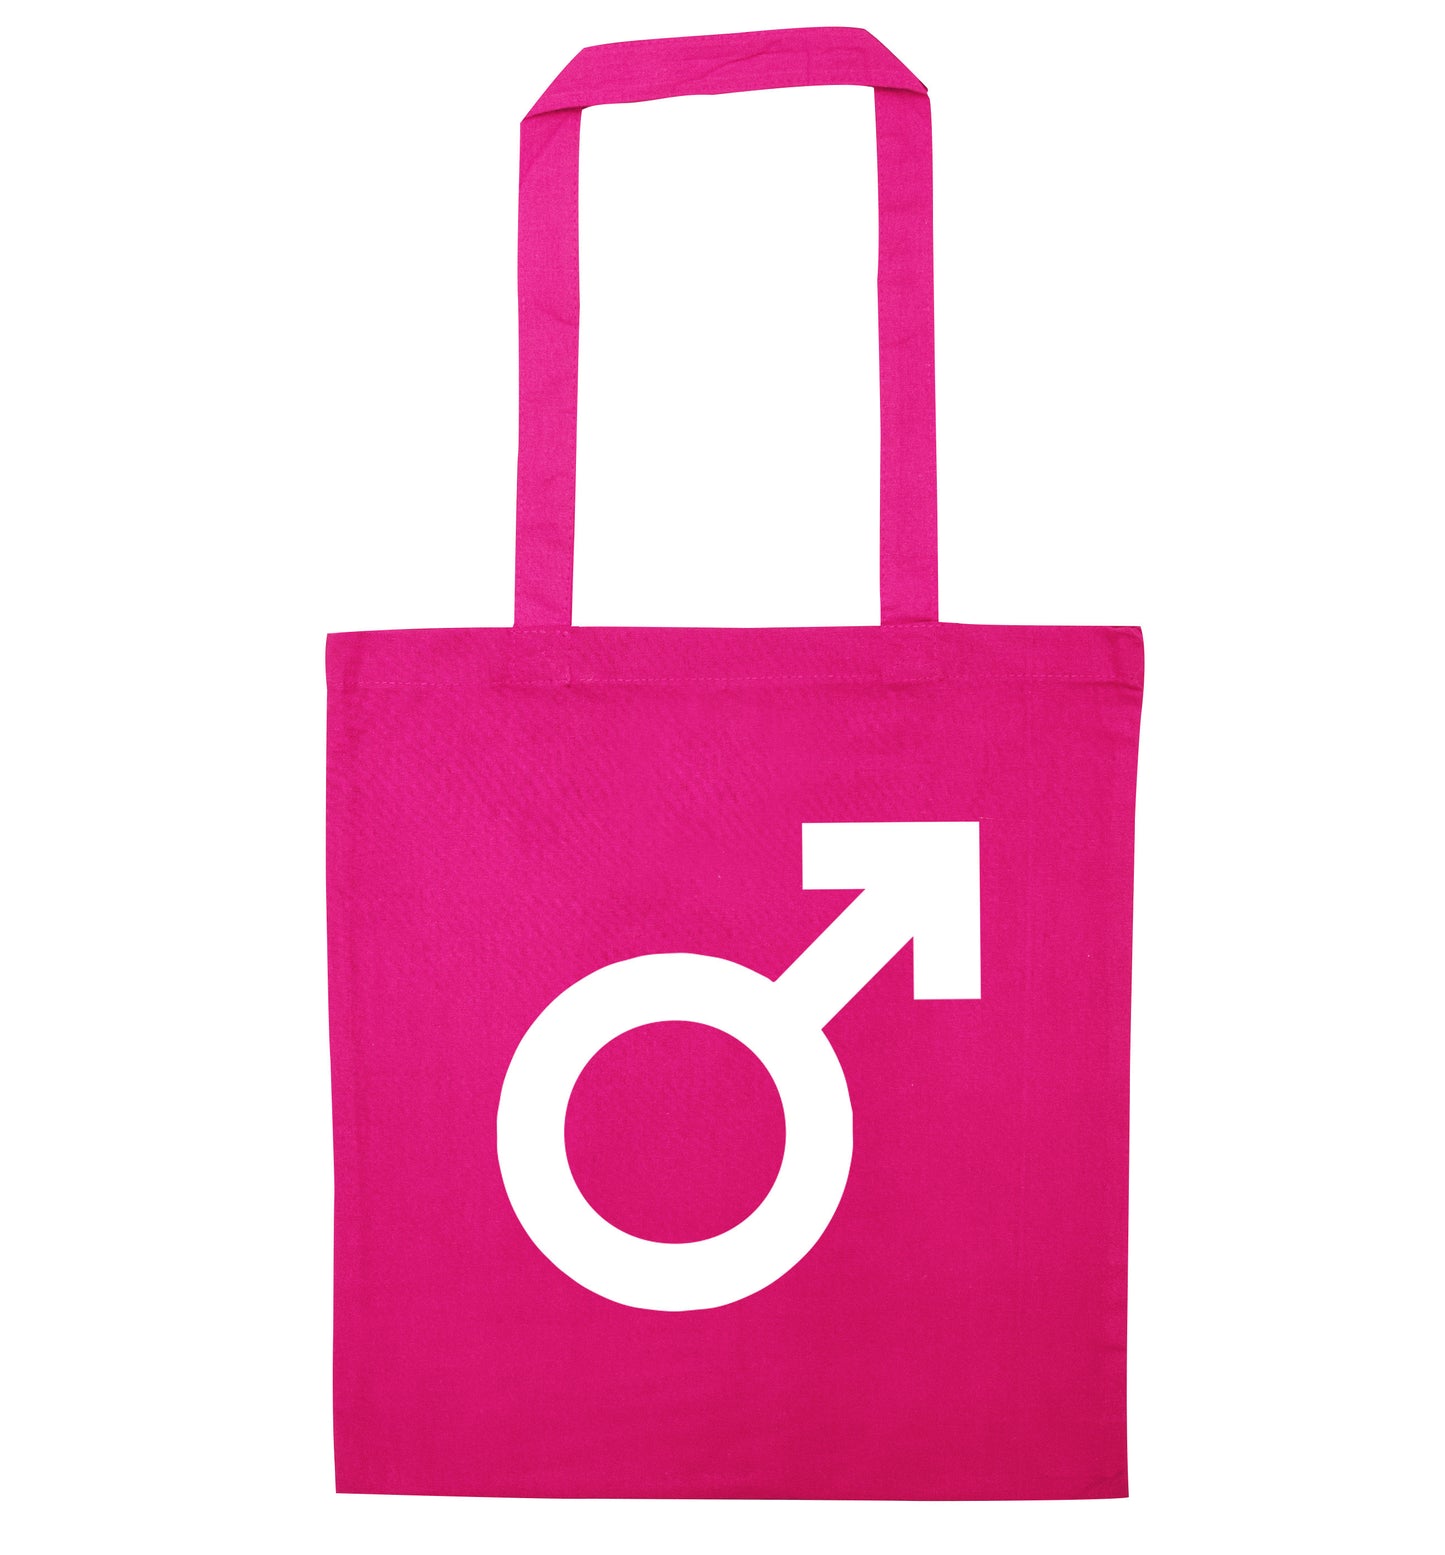 Male symbol large pink tote bag